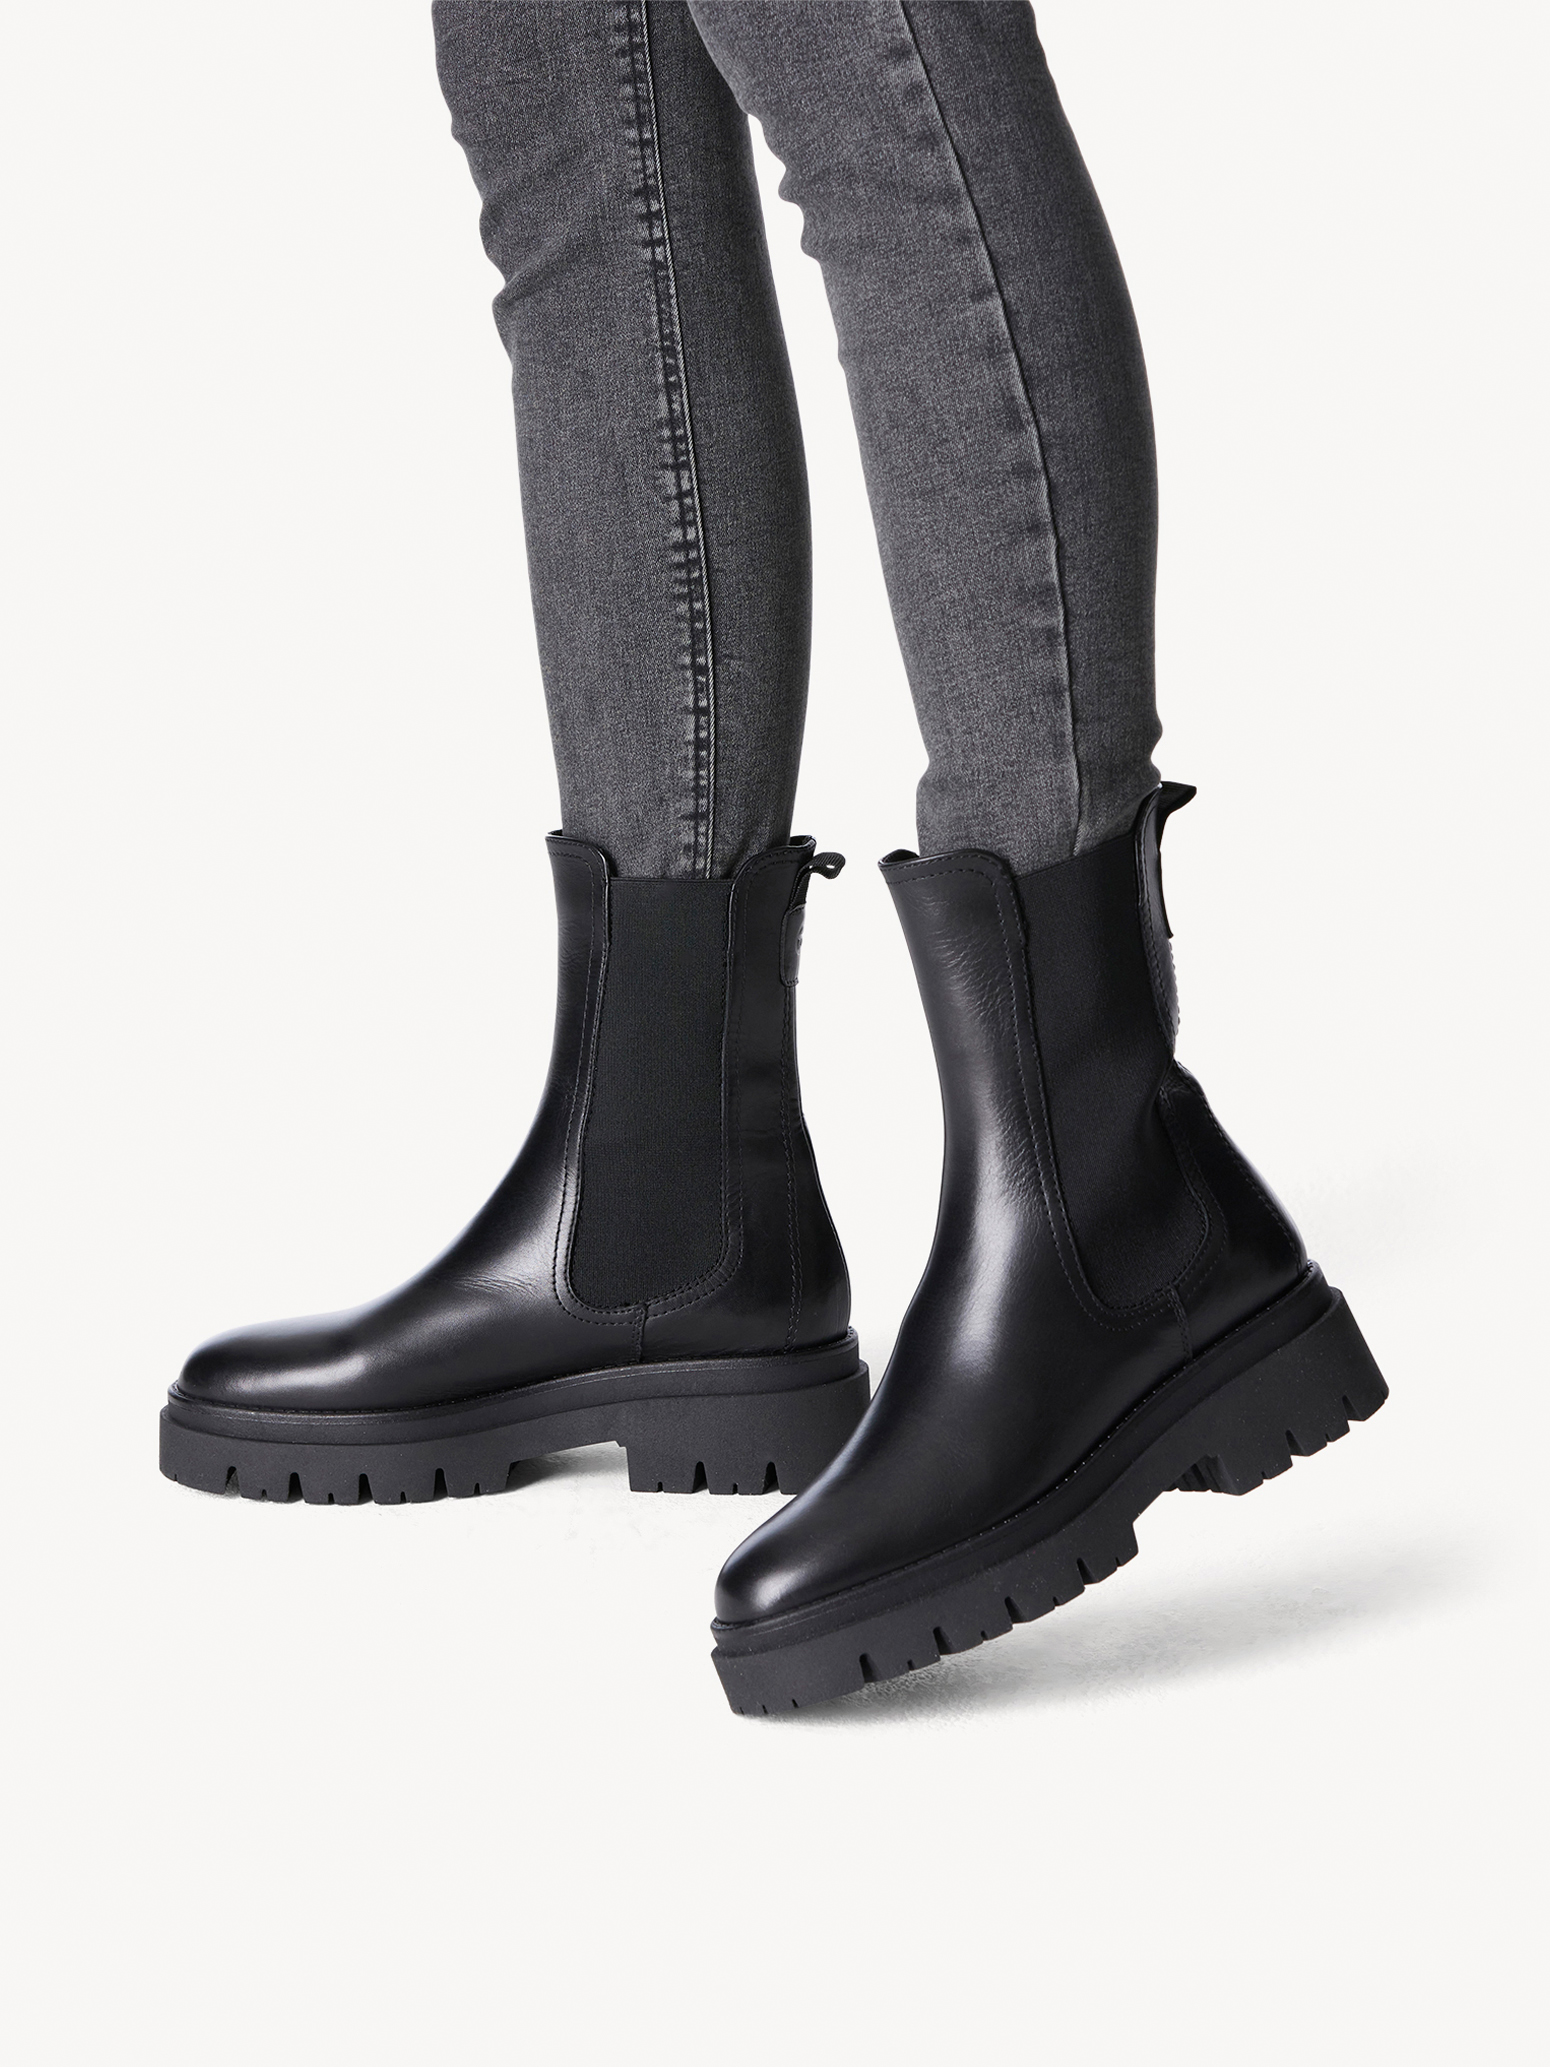 Leather Chelsea boot - black 1-25992-41-001: Buy Tamaris Chelsea boots ...